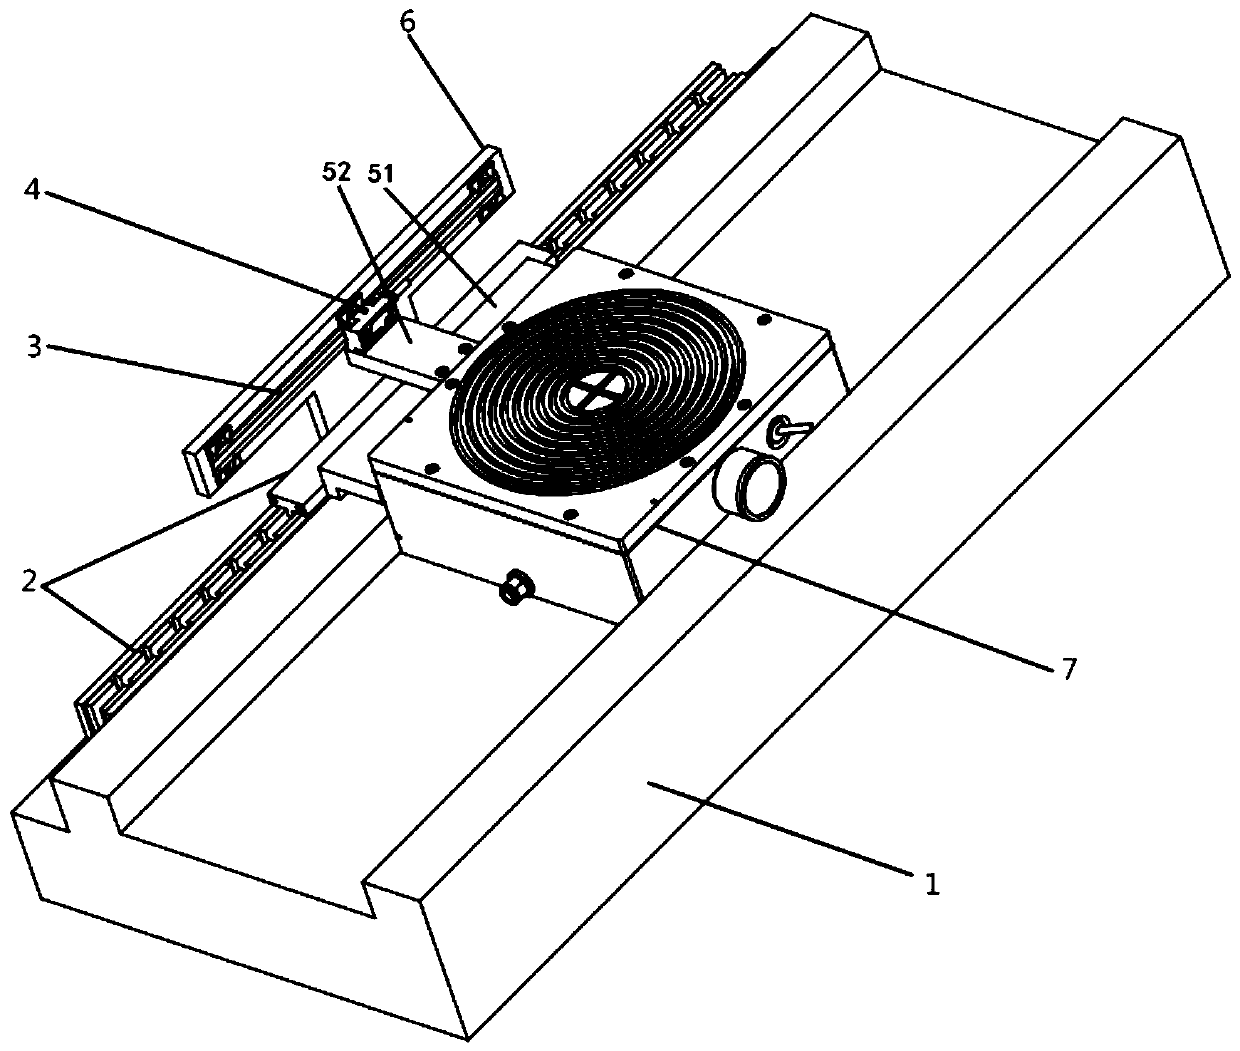 An air-floating precision motion platform